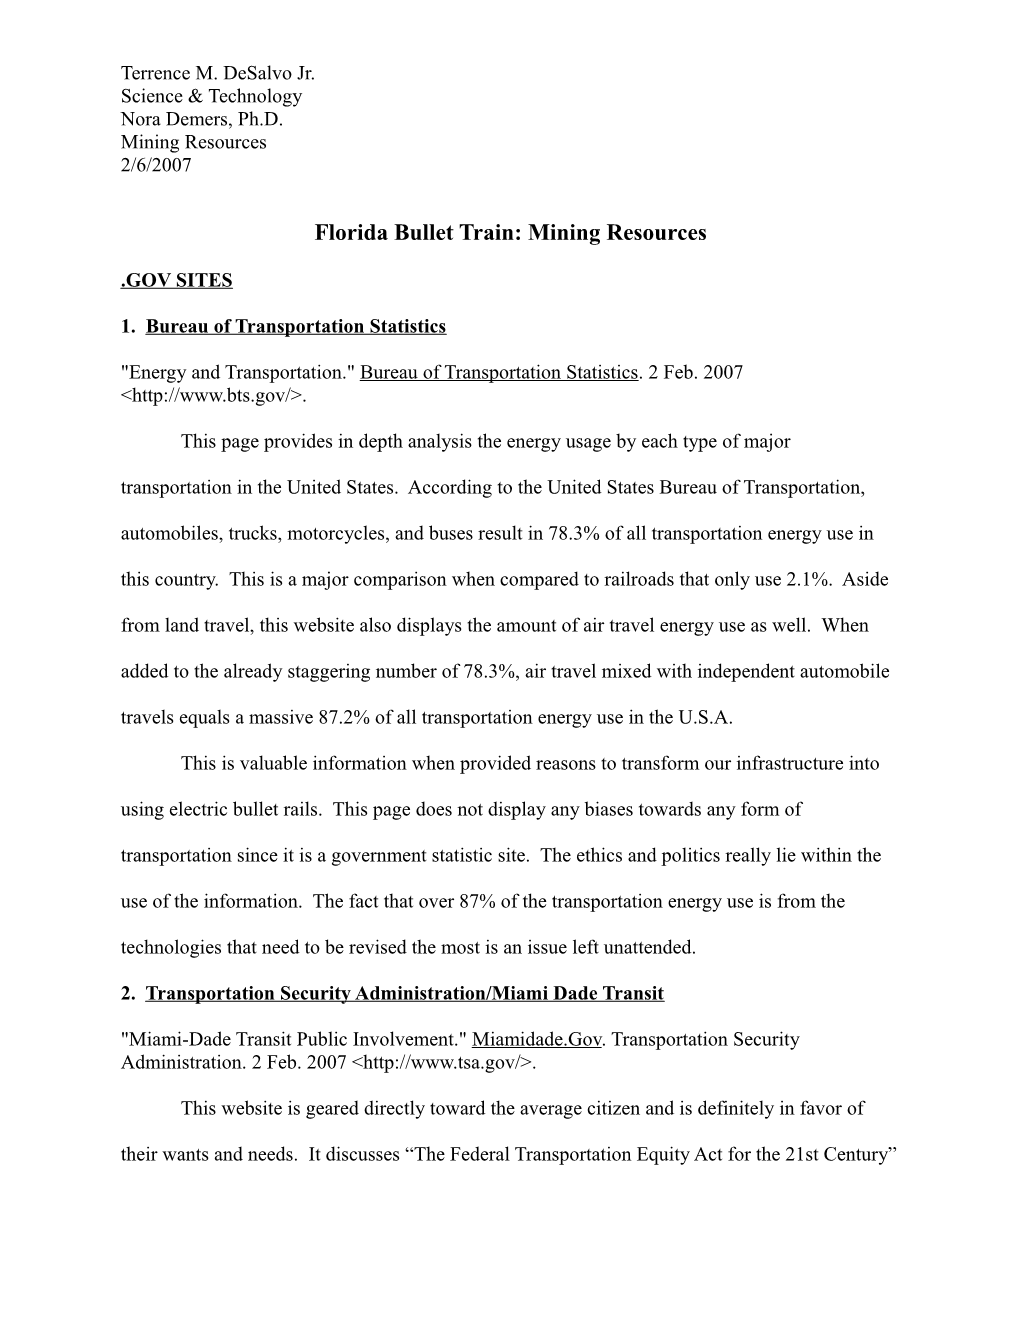 Florida Bullet Train: Mining Resources